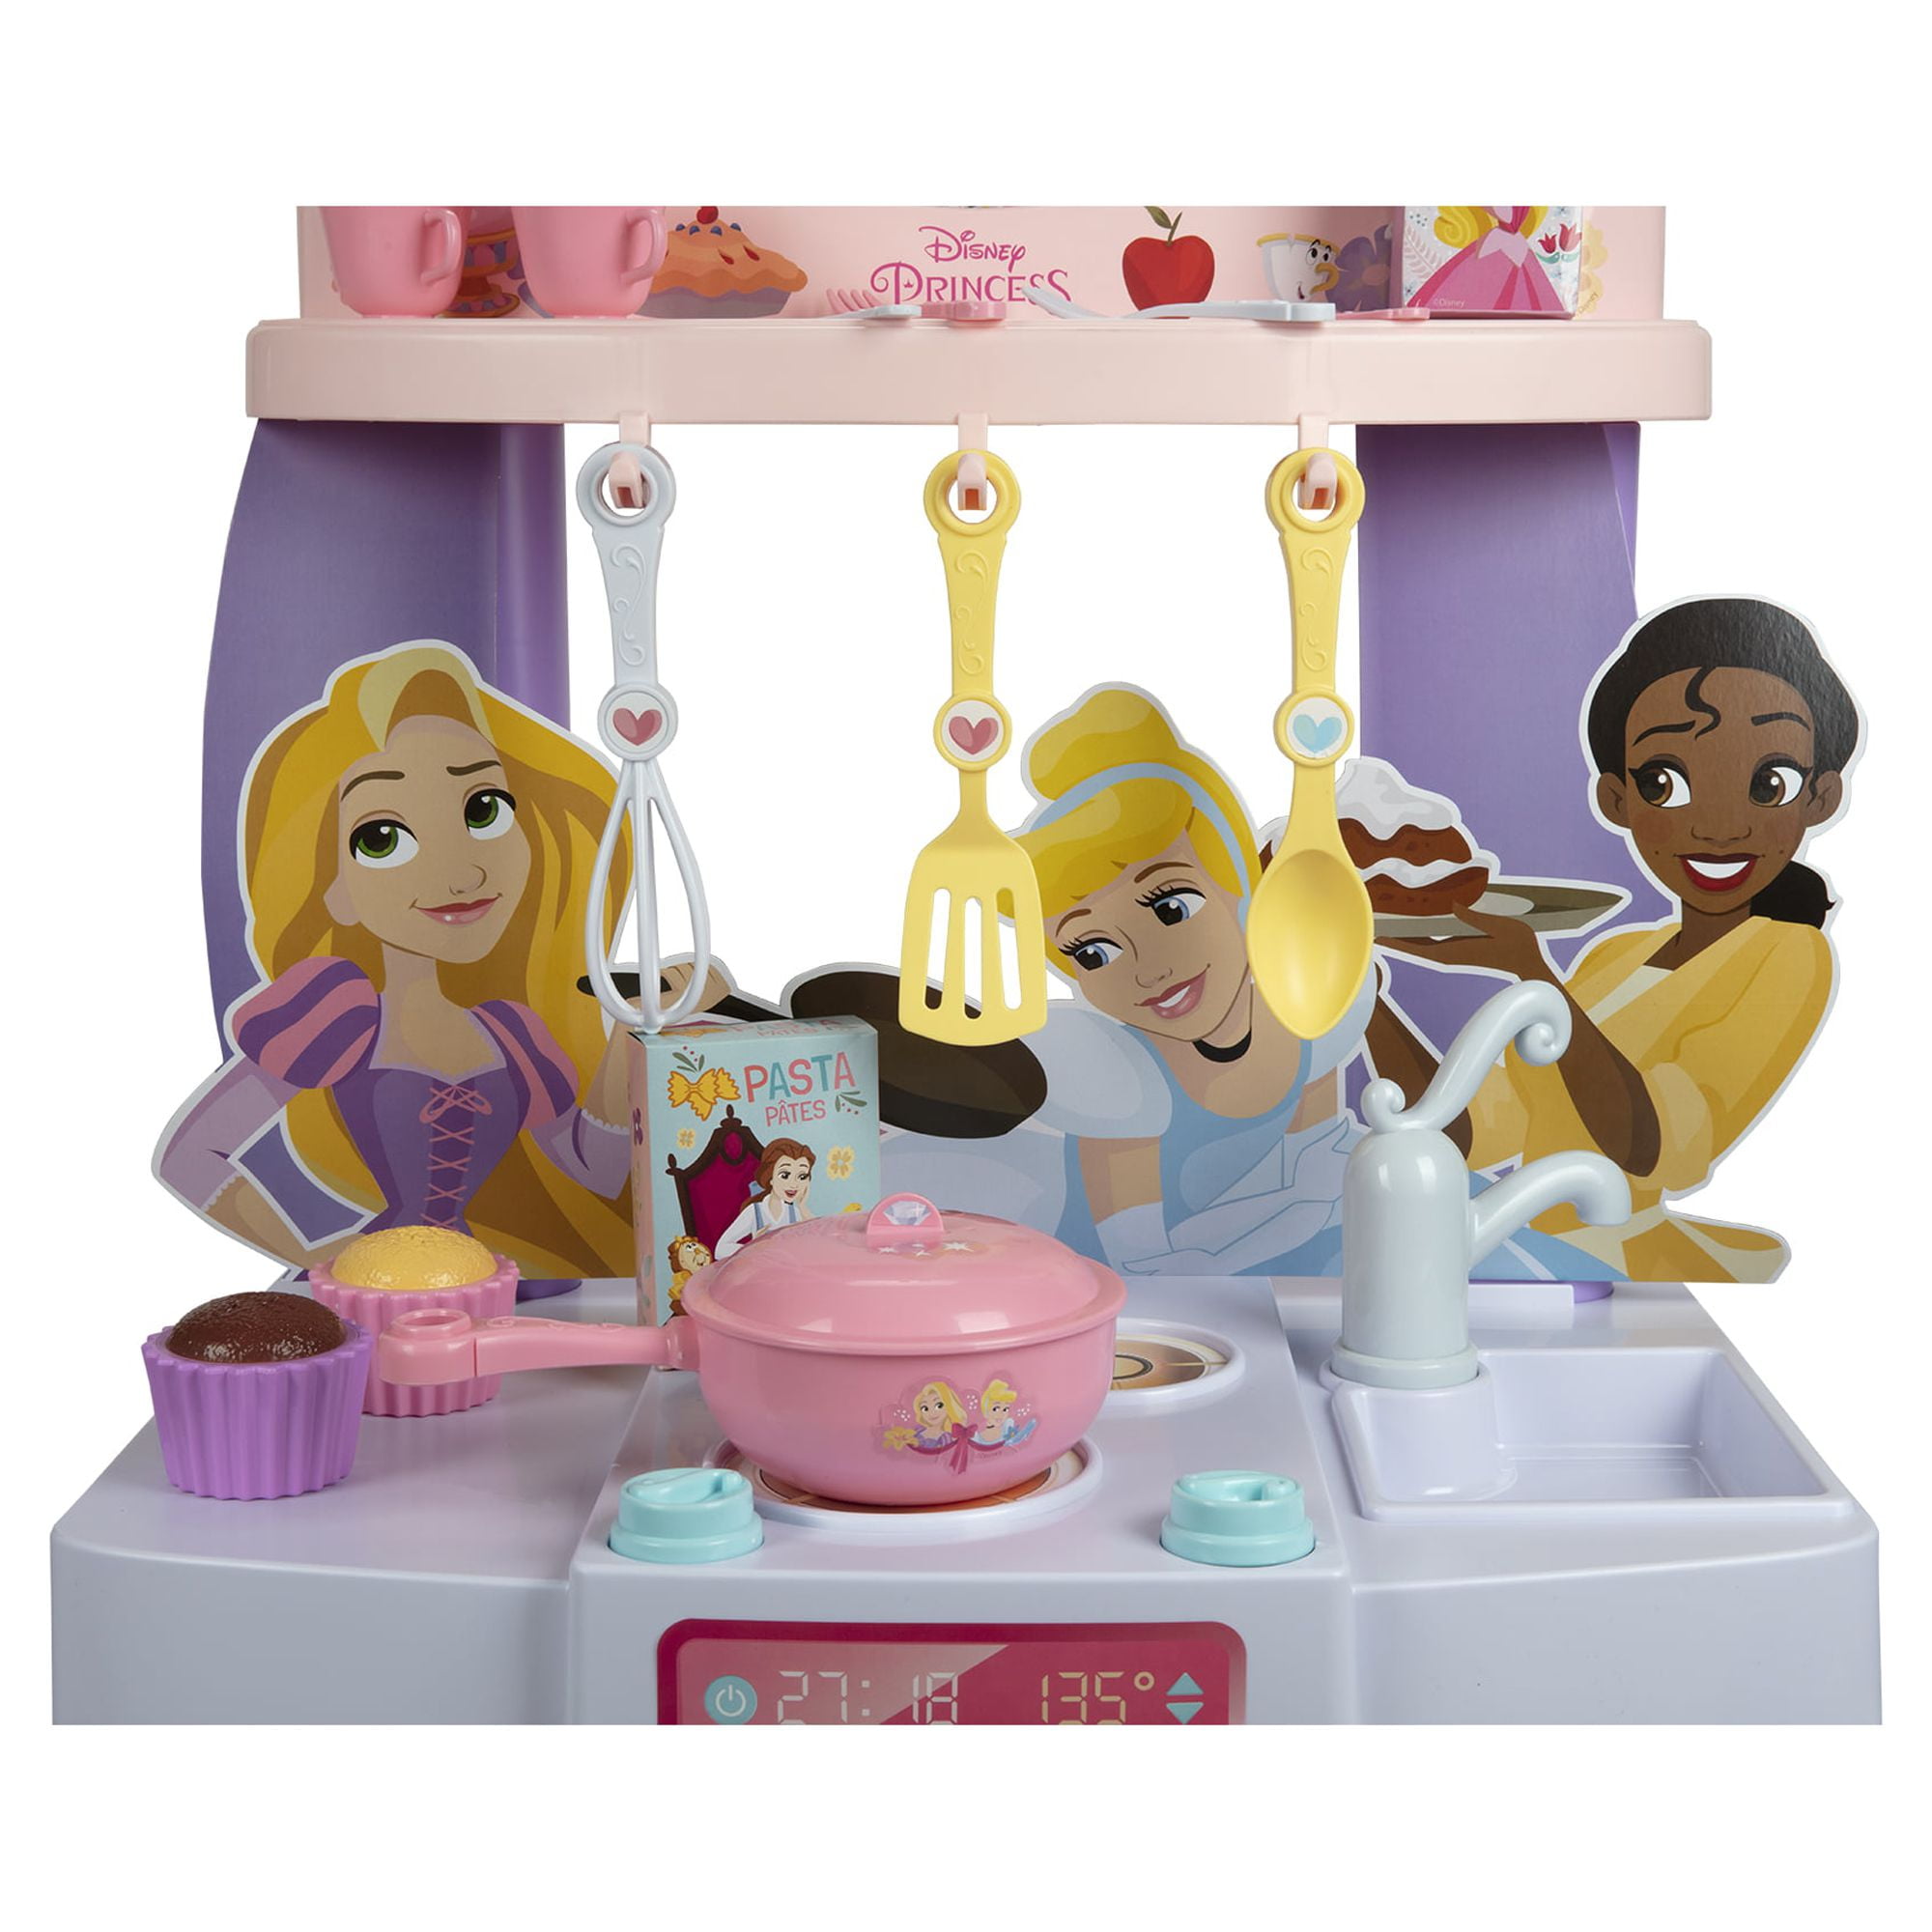 Disney Princess Royal Kingdom KITCHEN and CAFE Playset